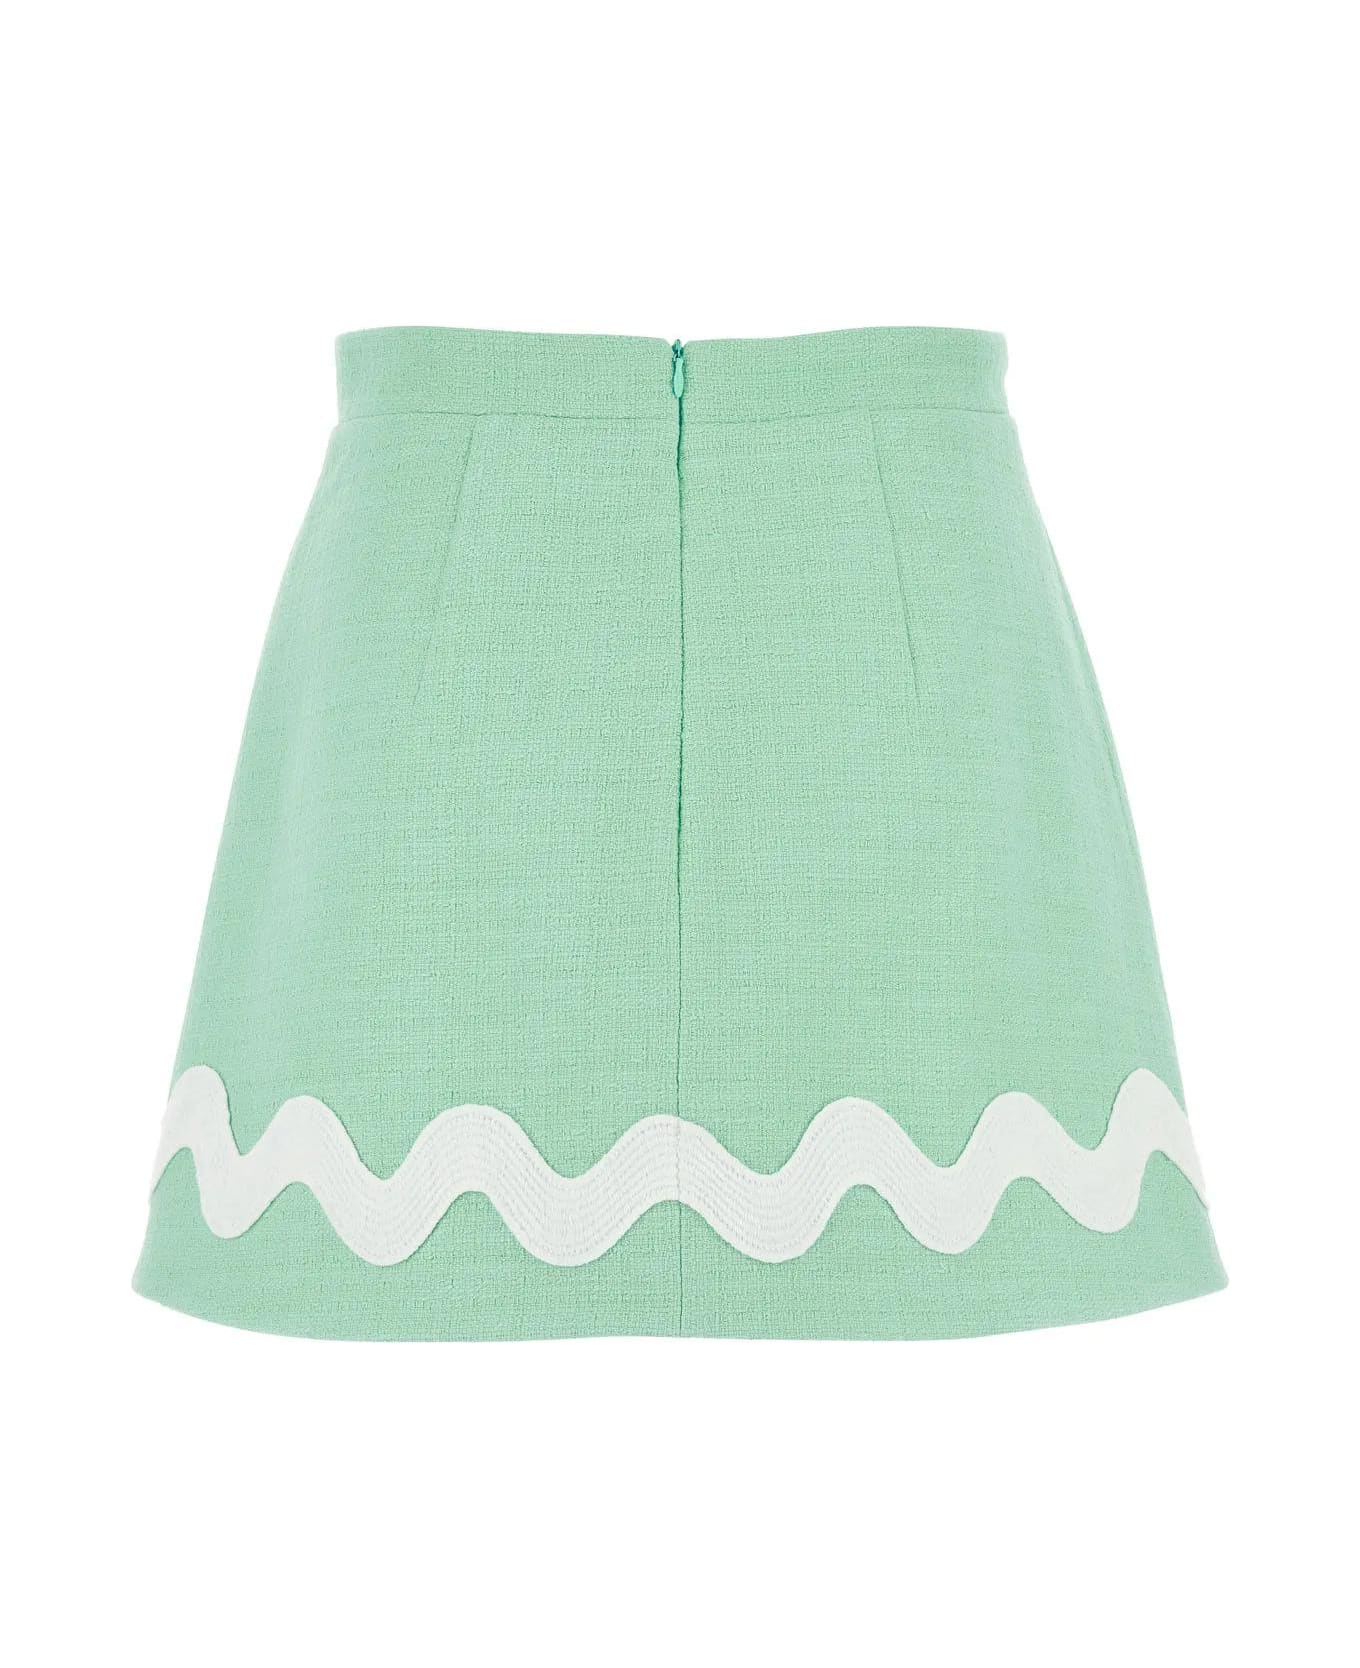 Patou Sea Green Tweed Mini Skirt - Mint green スカート